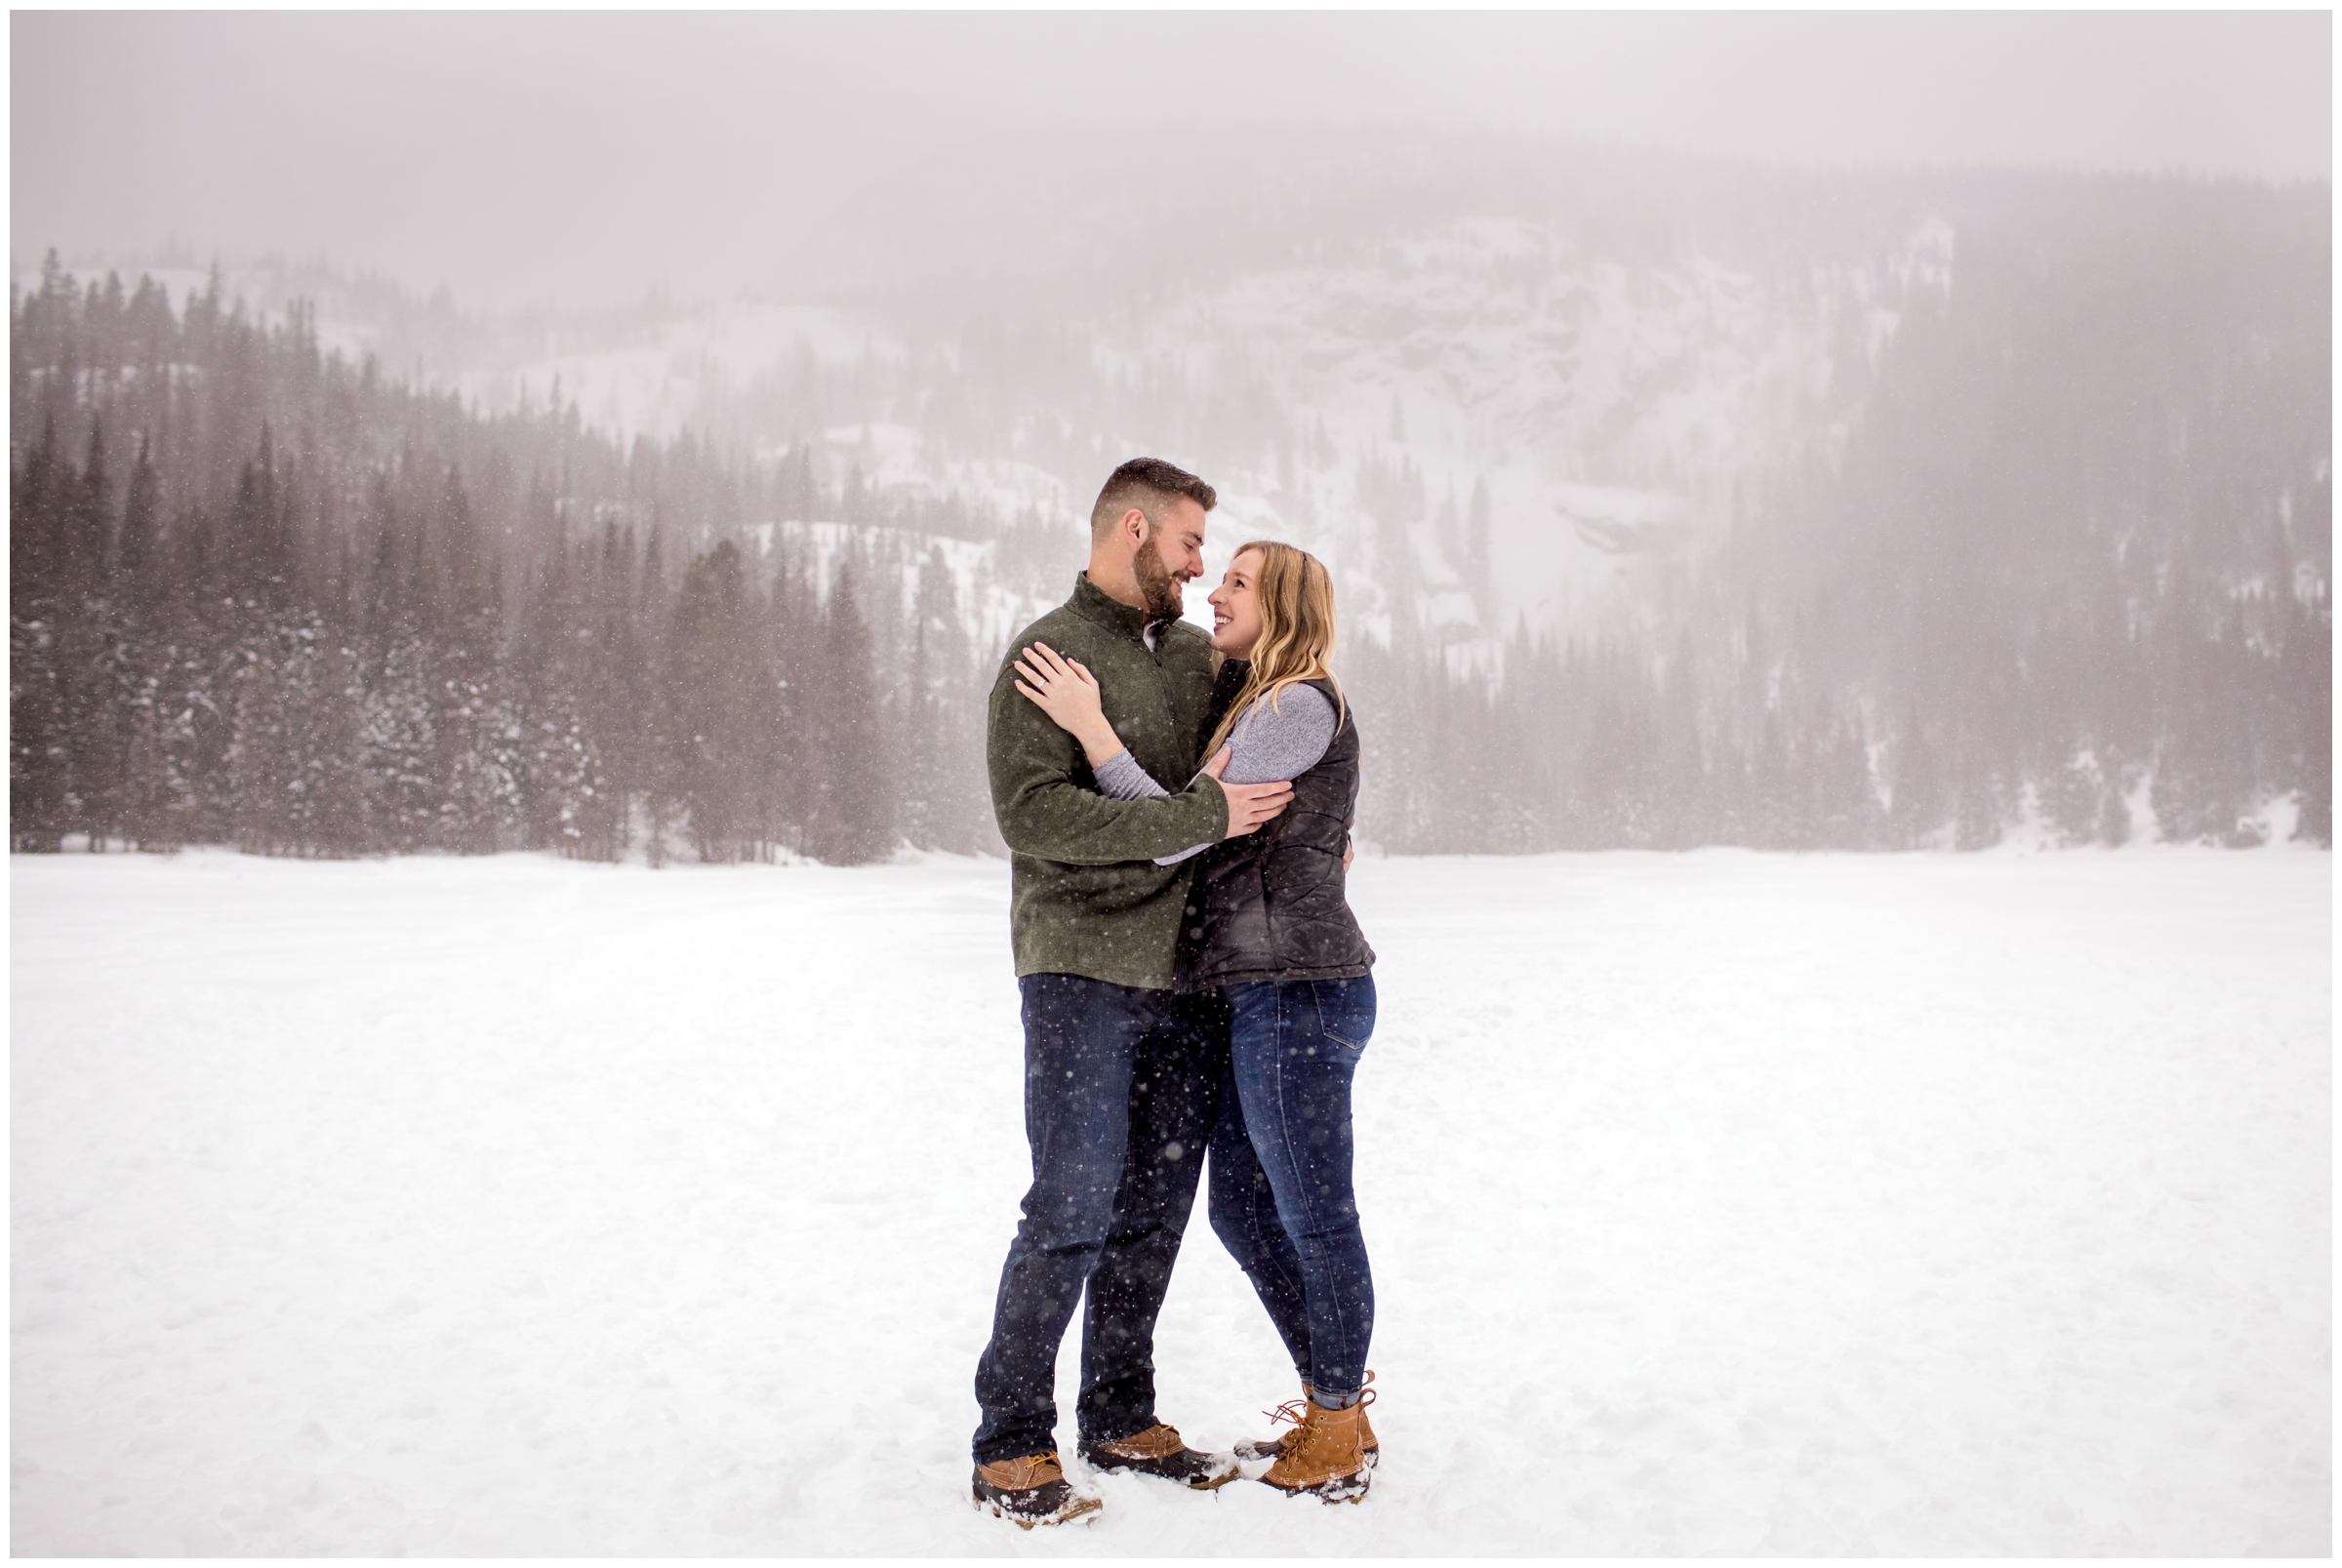 Snowy RMNP winter engagement photos at Bear Lake by Colorado wedding photographer Plum Pretty Photo